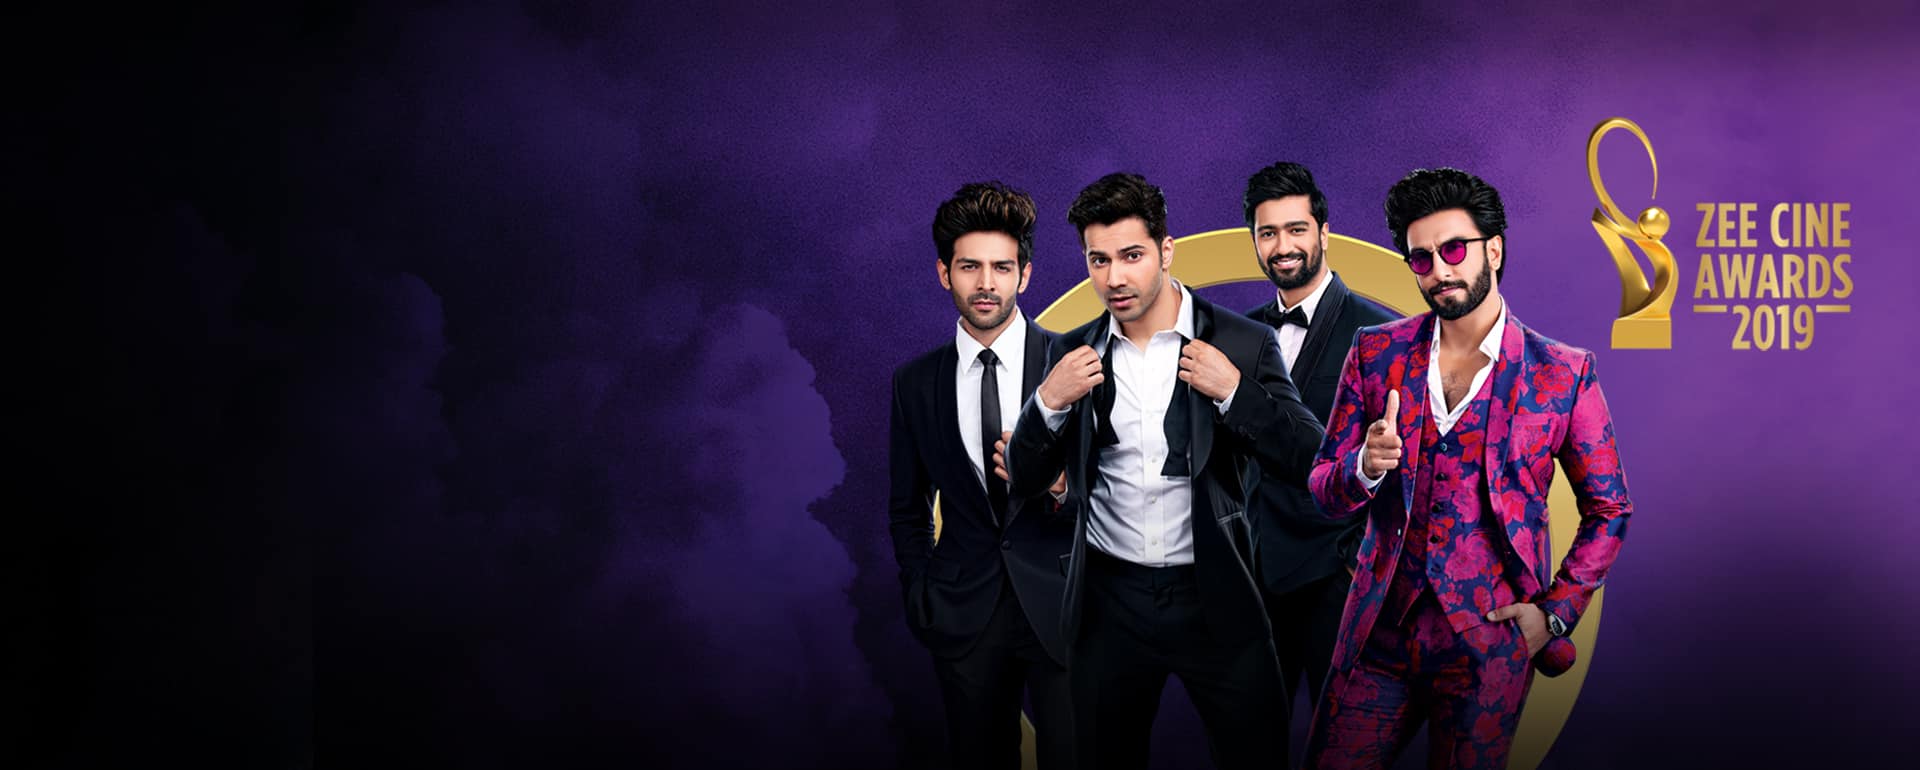 Zee Cine Awards (2019) Hindi Main Event Full 480p 720p HDRip Download